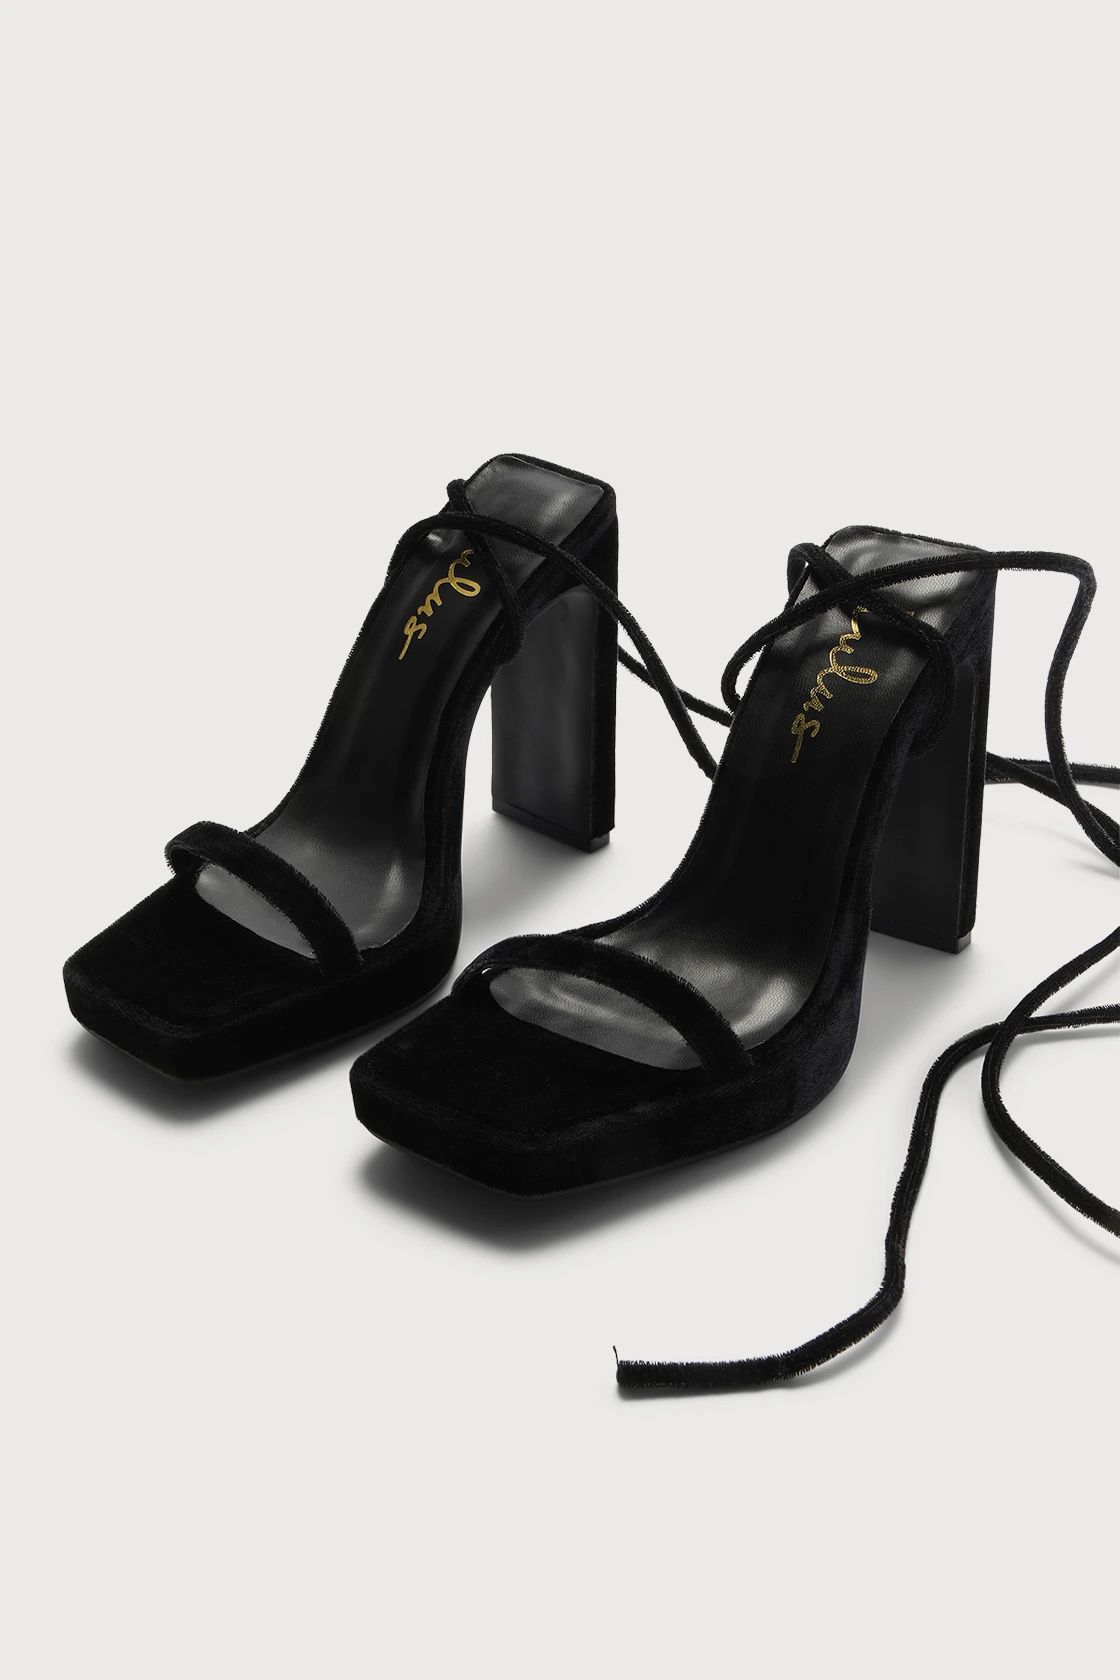 Guesty Black Velvet Lace-Up High Heel Sandals | Lulus